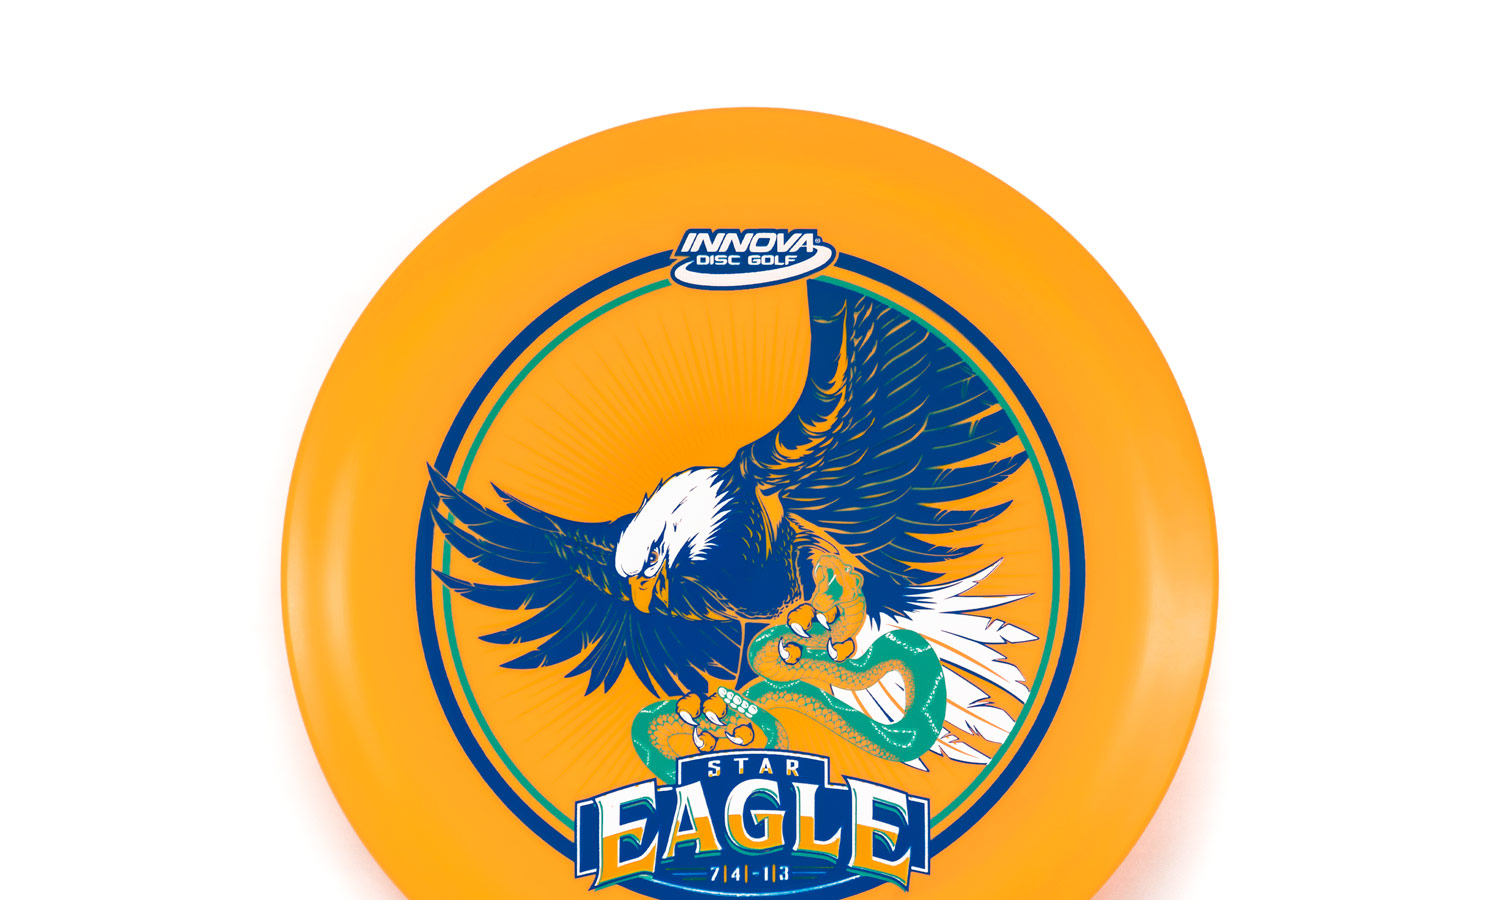 Eagle - Innova Disc Golf